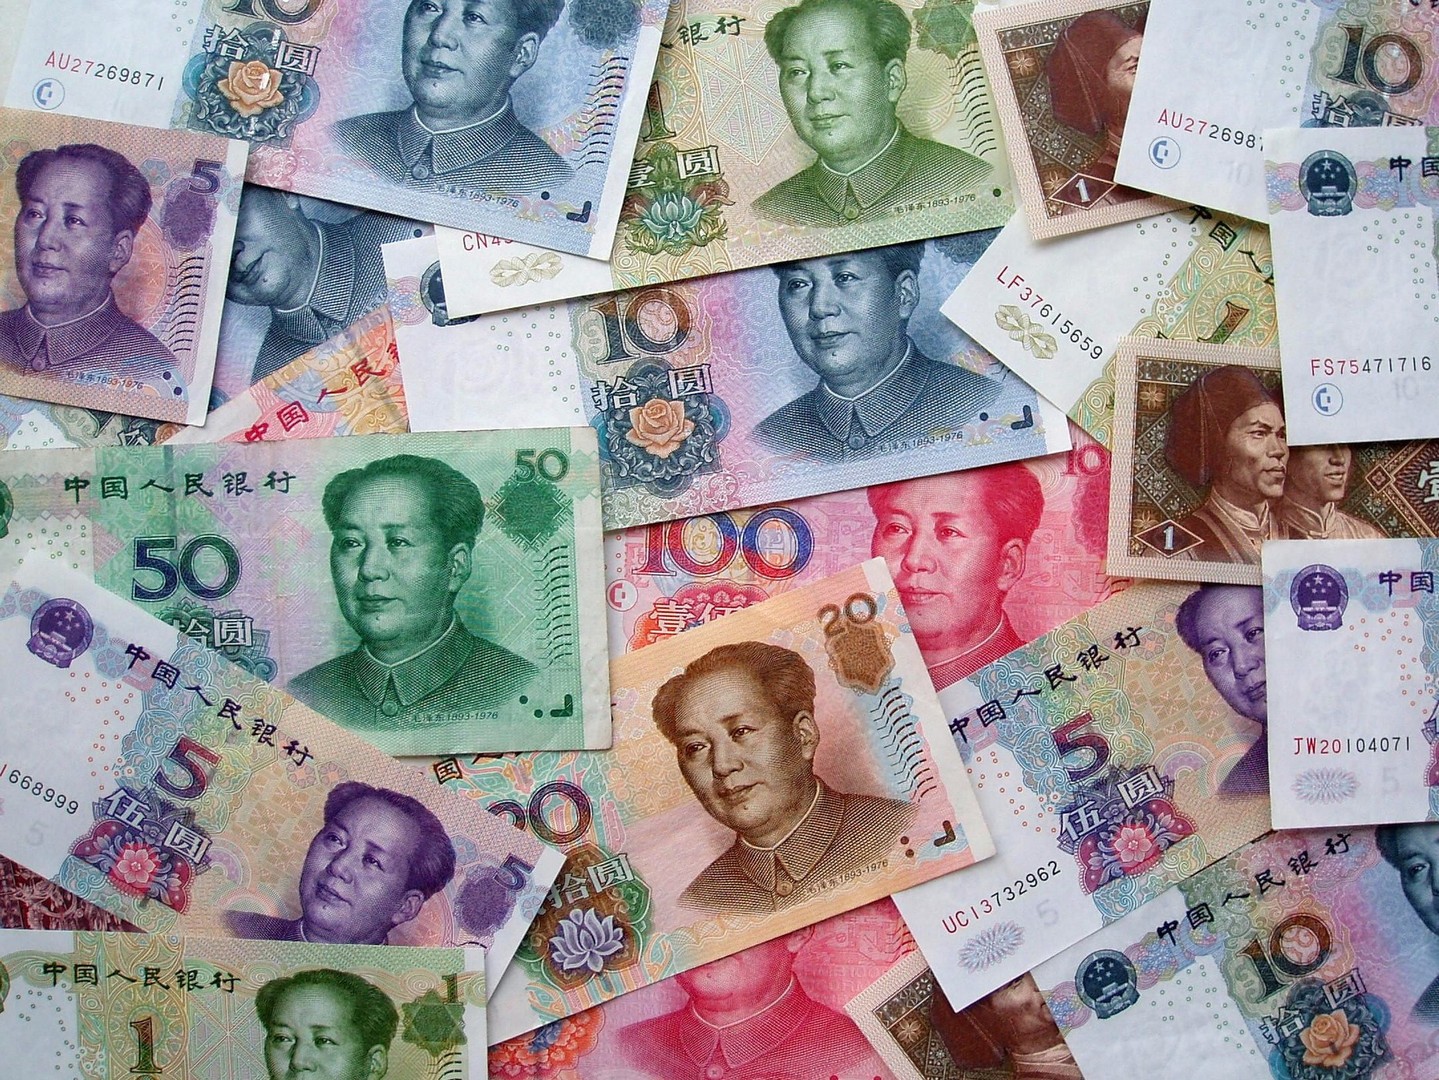 У россиян повышается интерес к юаням, банки оперативно реагируют на спрос - новости Афанасий